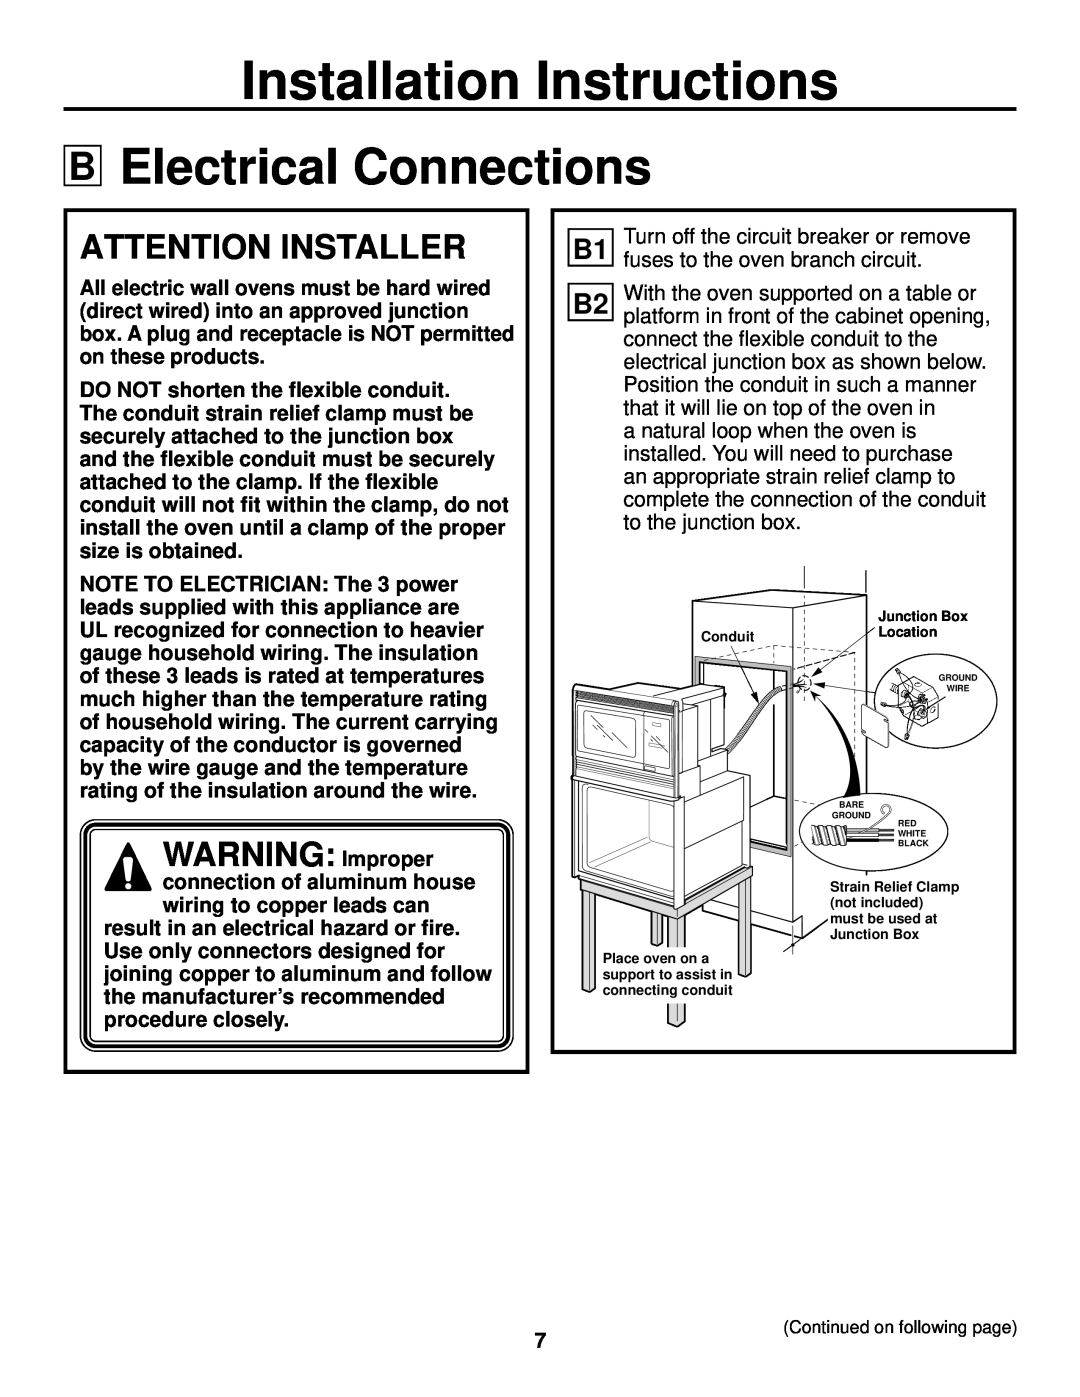 GE JTP90, JKP90 Electrical Connections, Attention Installer, WARNING Improper, Installation Instructions 